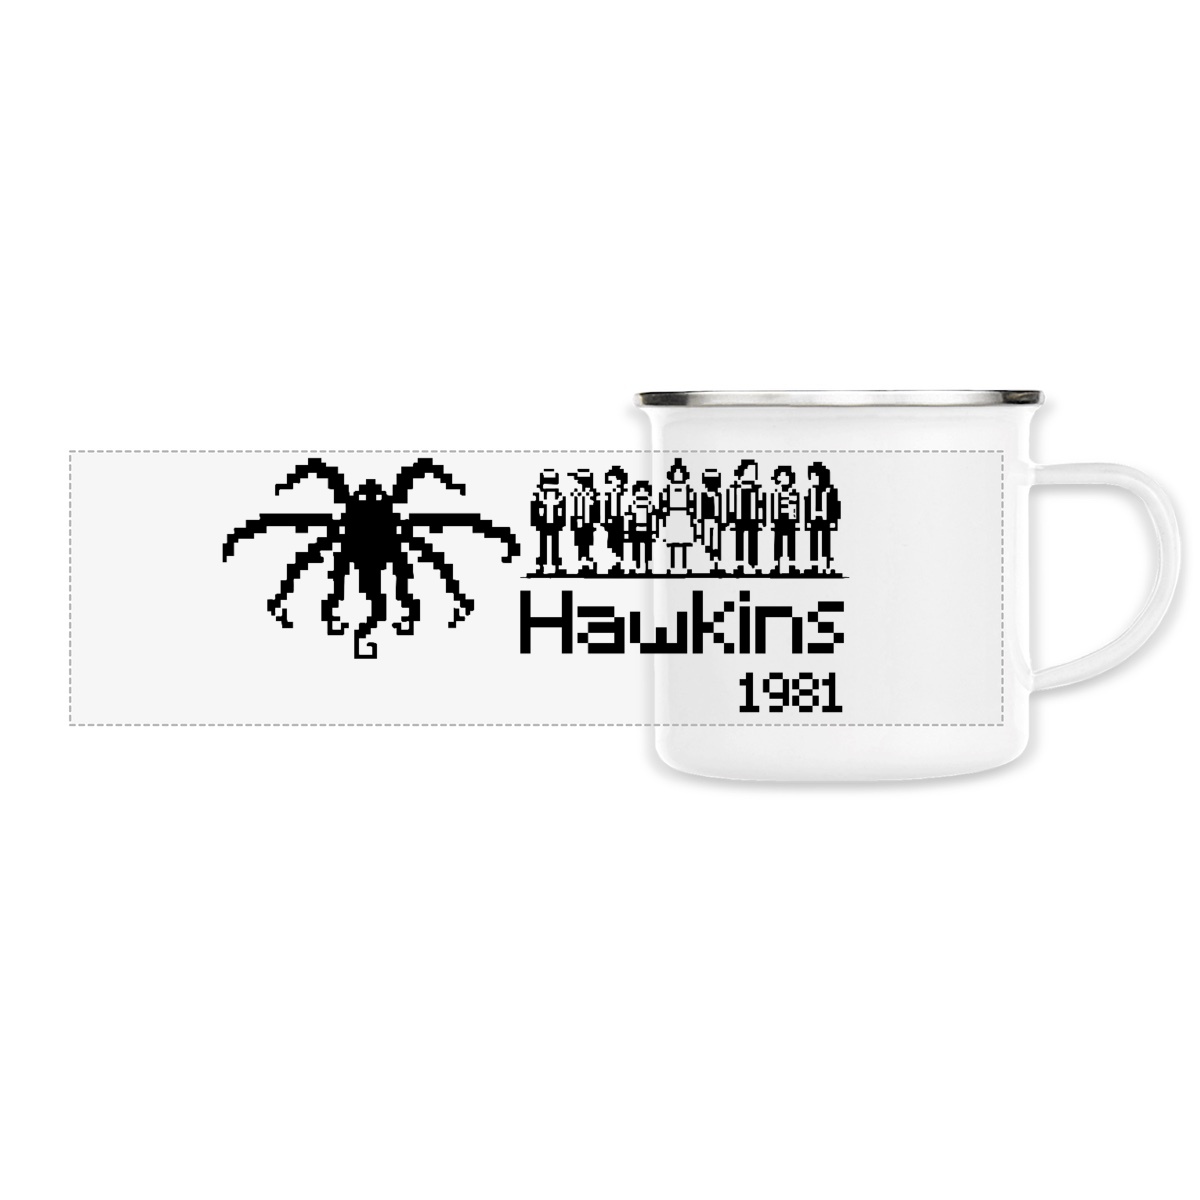 Mug metal - Hawkins